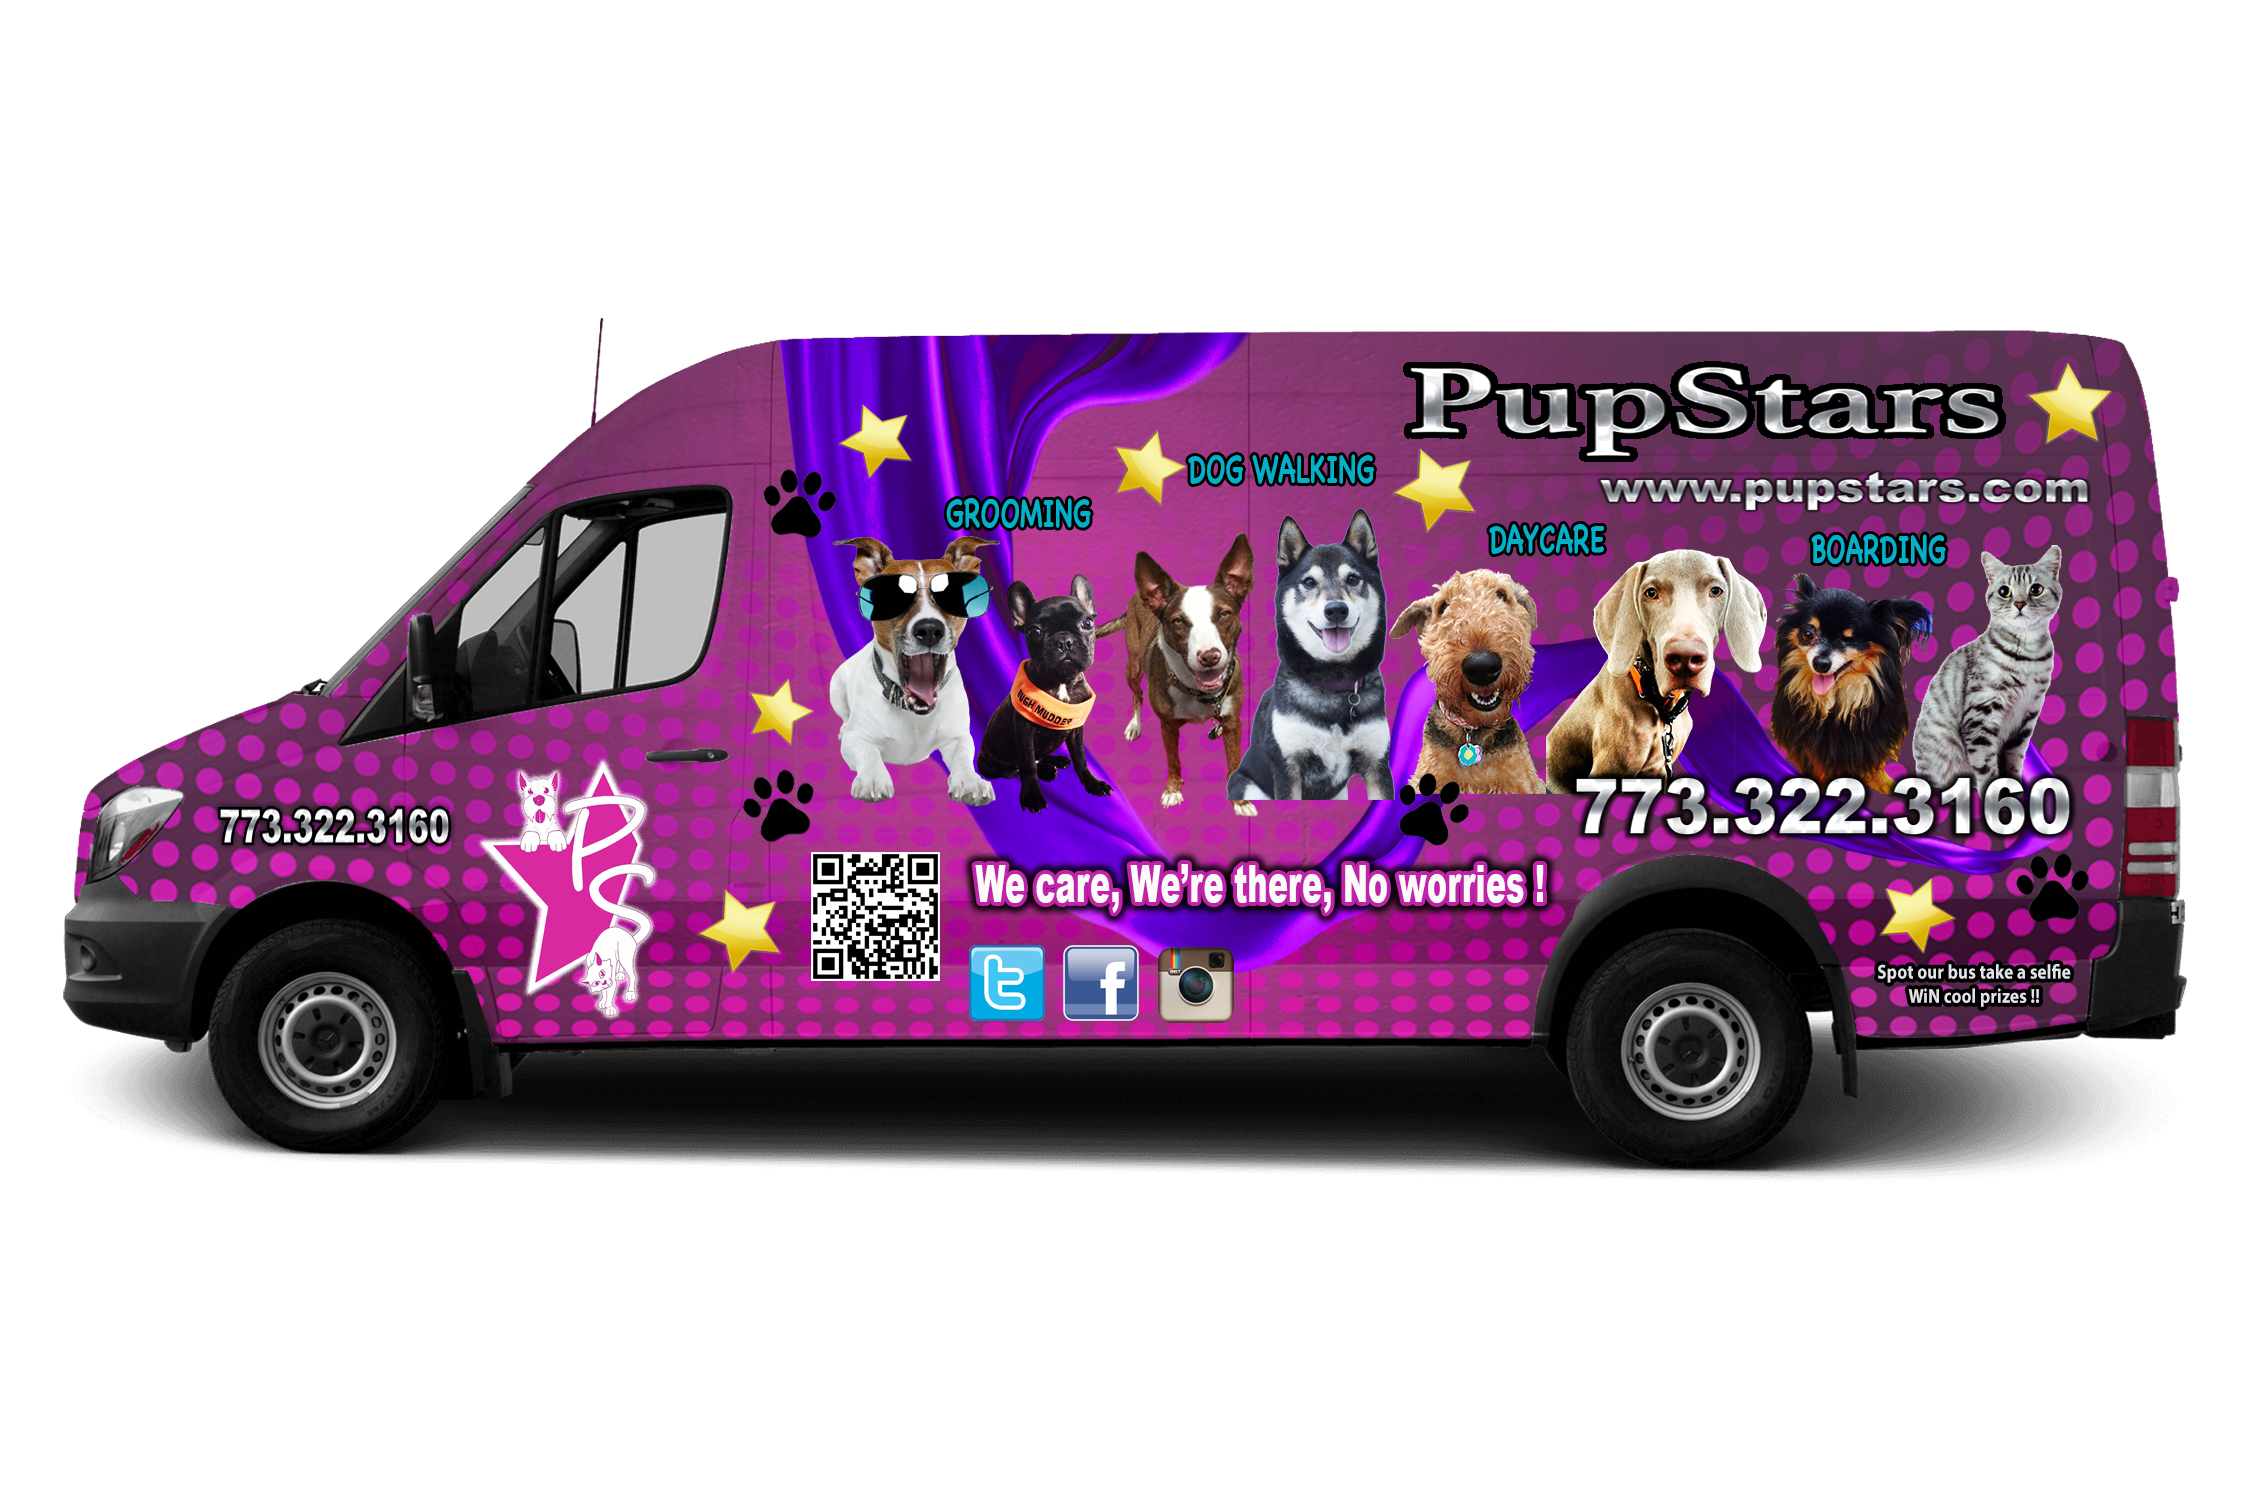 Big pink PupStars van